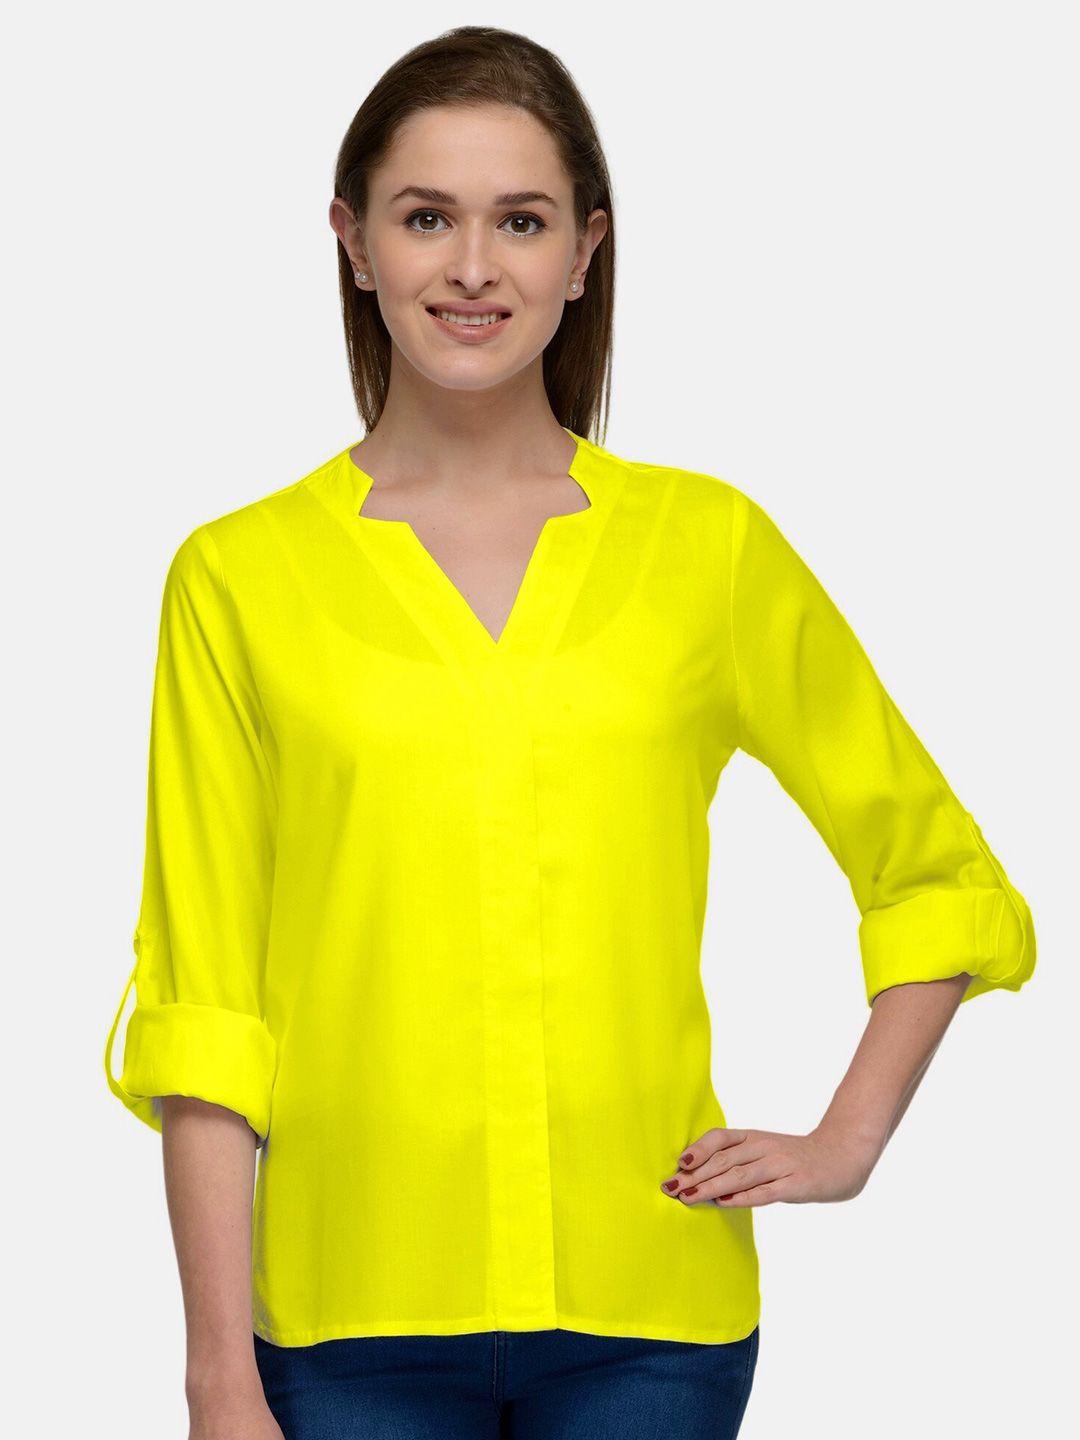 patrorna women yellow comfort casual shirt